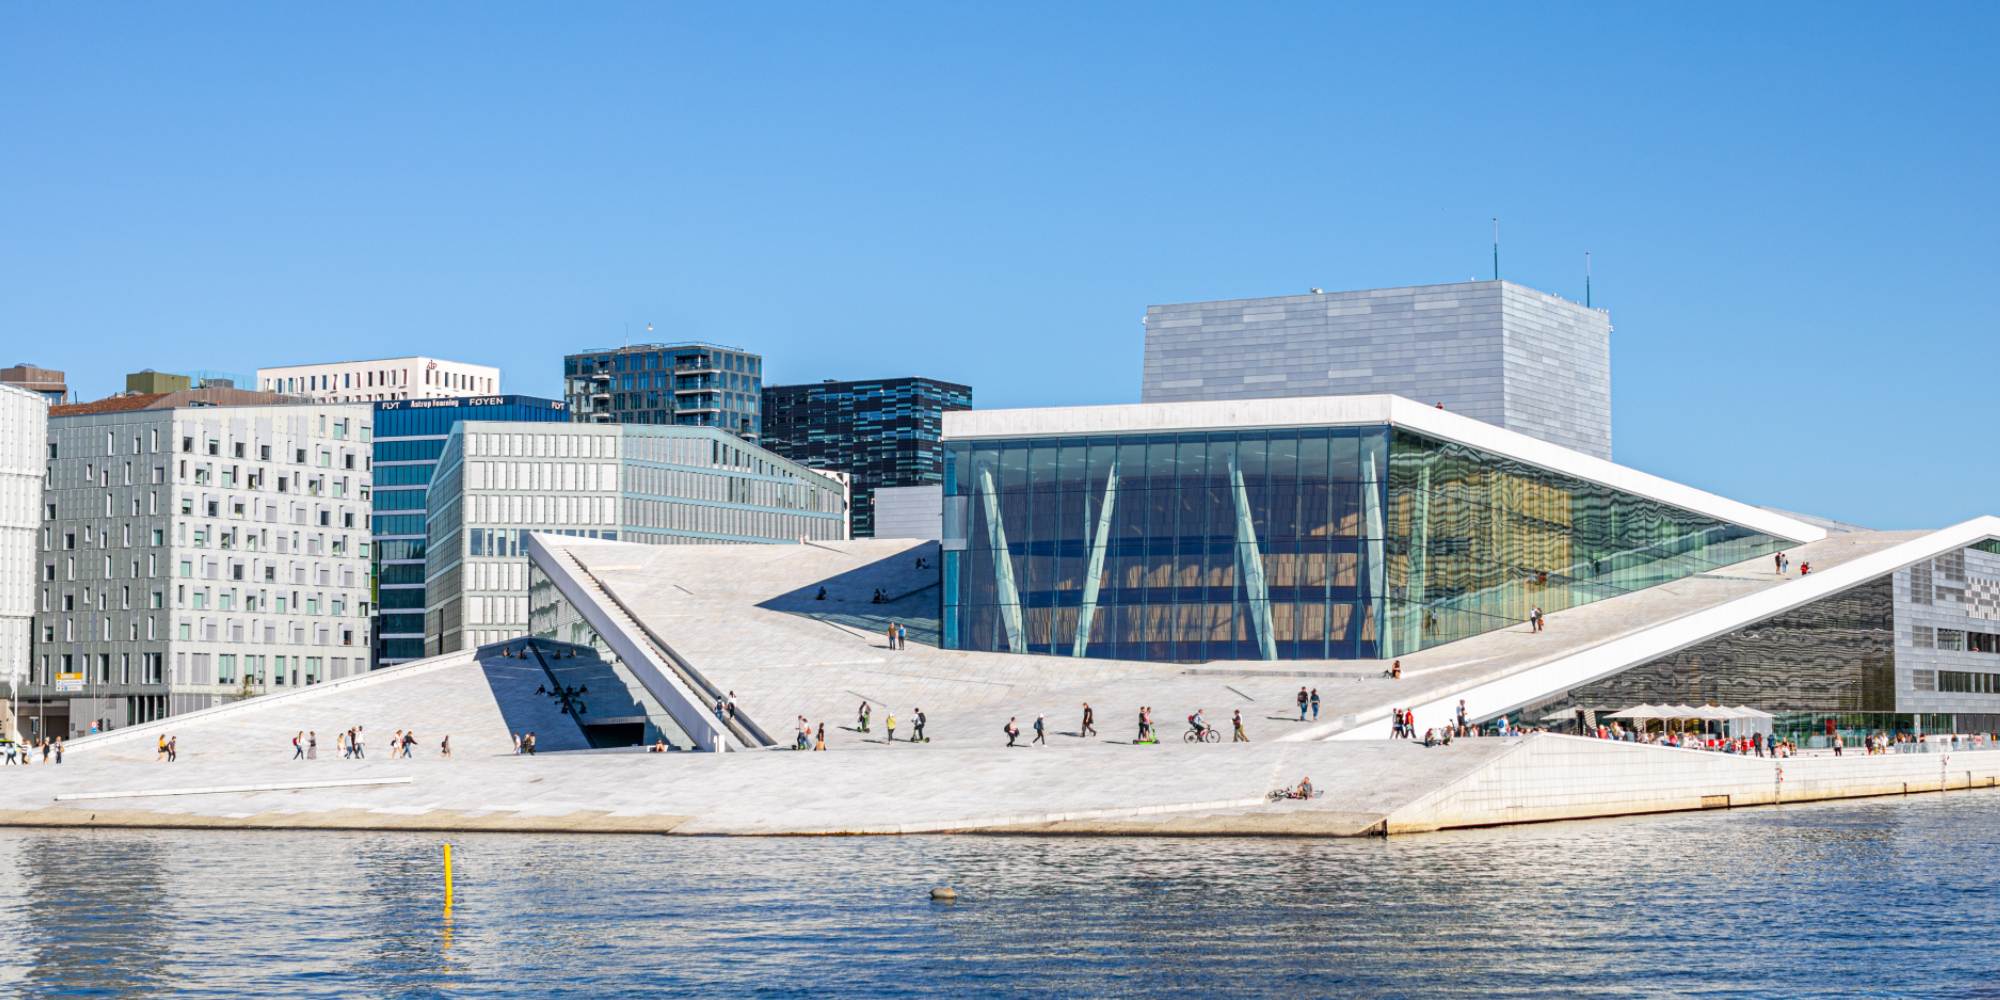 Oslo Opera House: walk the roof - Norway